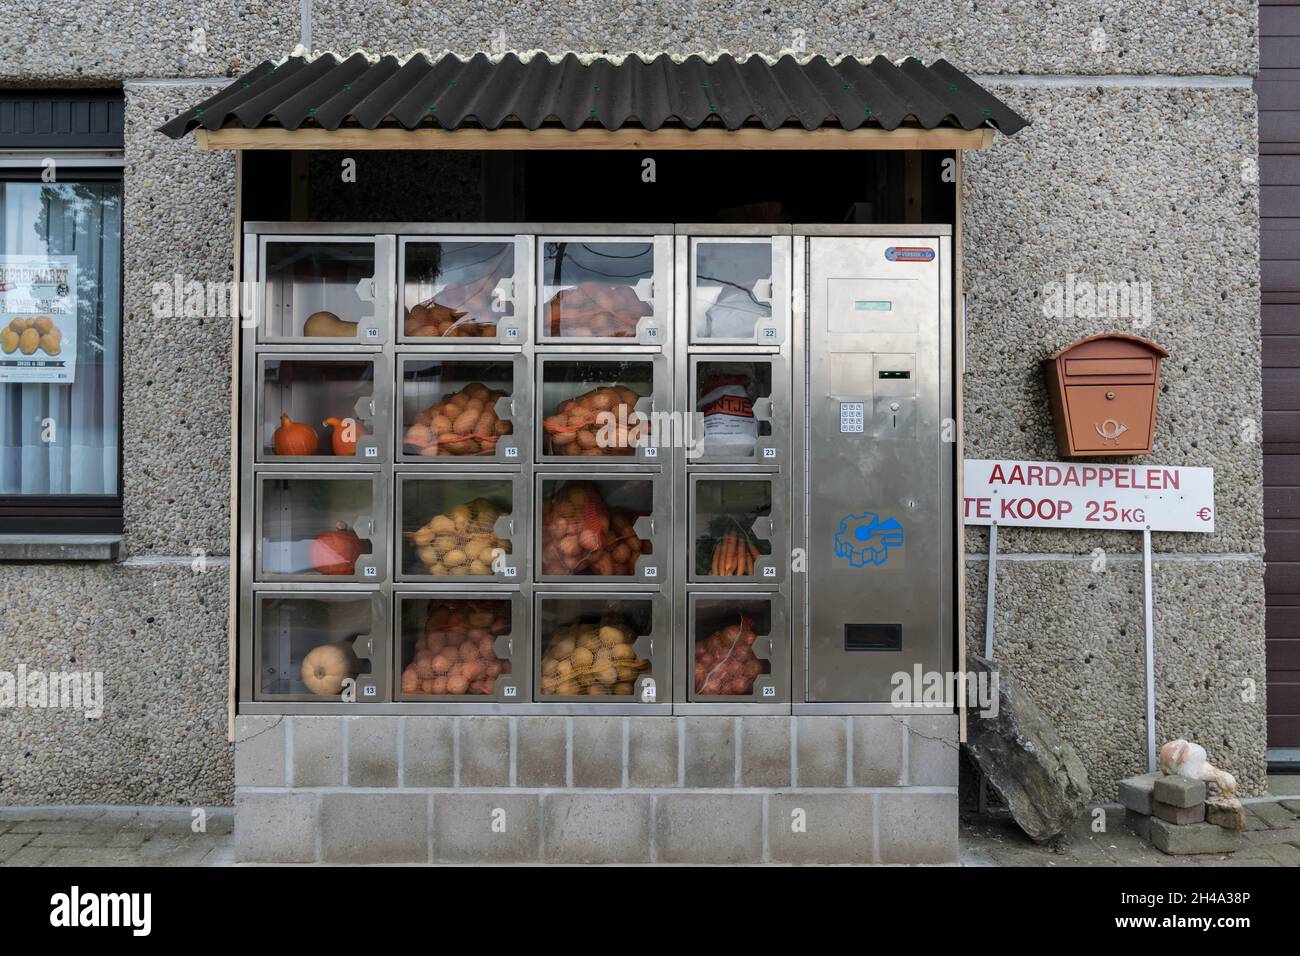 Oktober, 2018, Hezijde, Belgium: Vending machine with patatos, onions, pumpkins, carrots Stock Photo